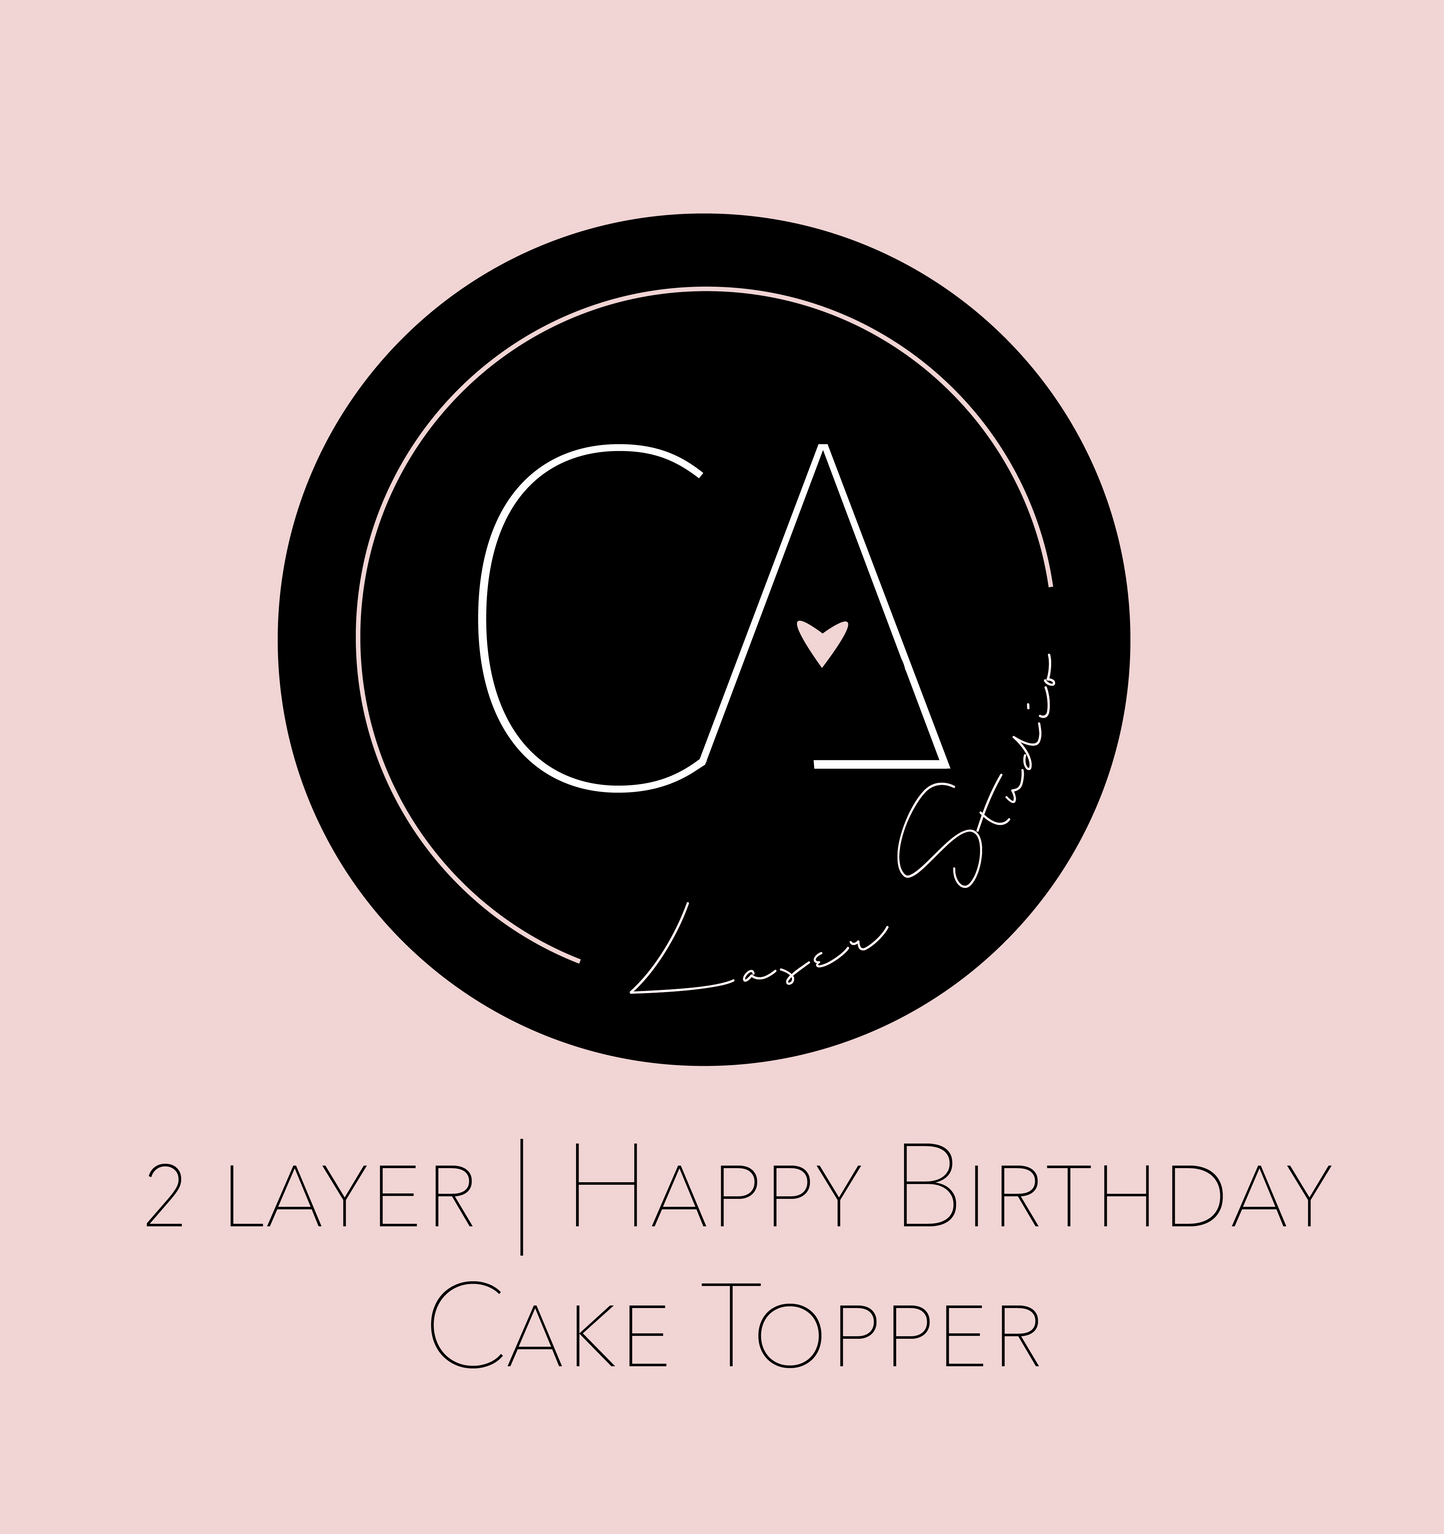 Happy Birthday Cake Topper | 2 Layers